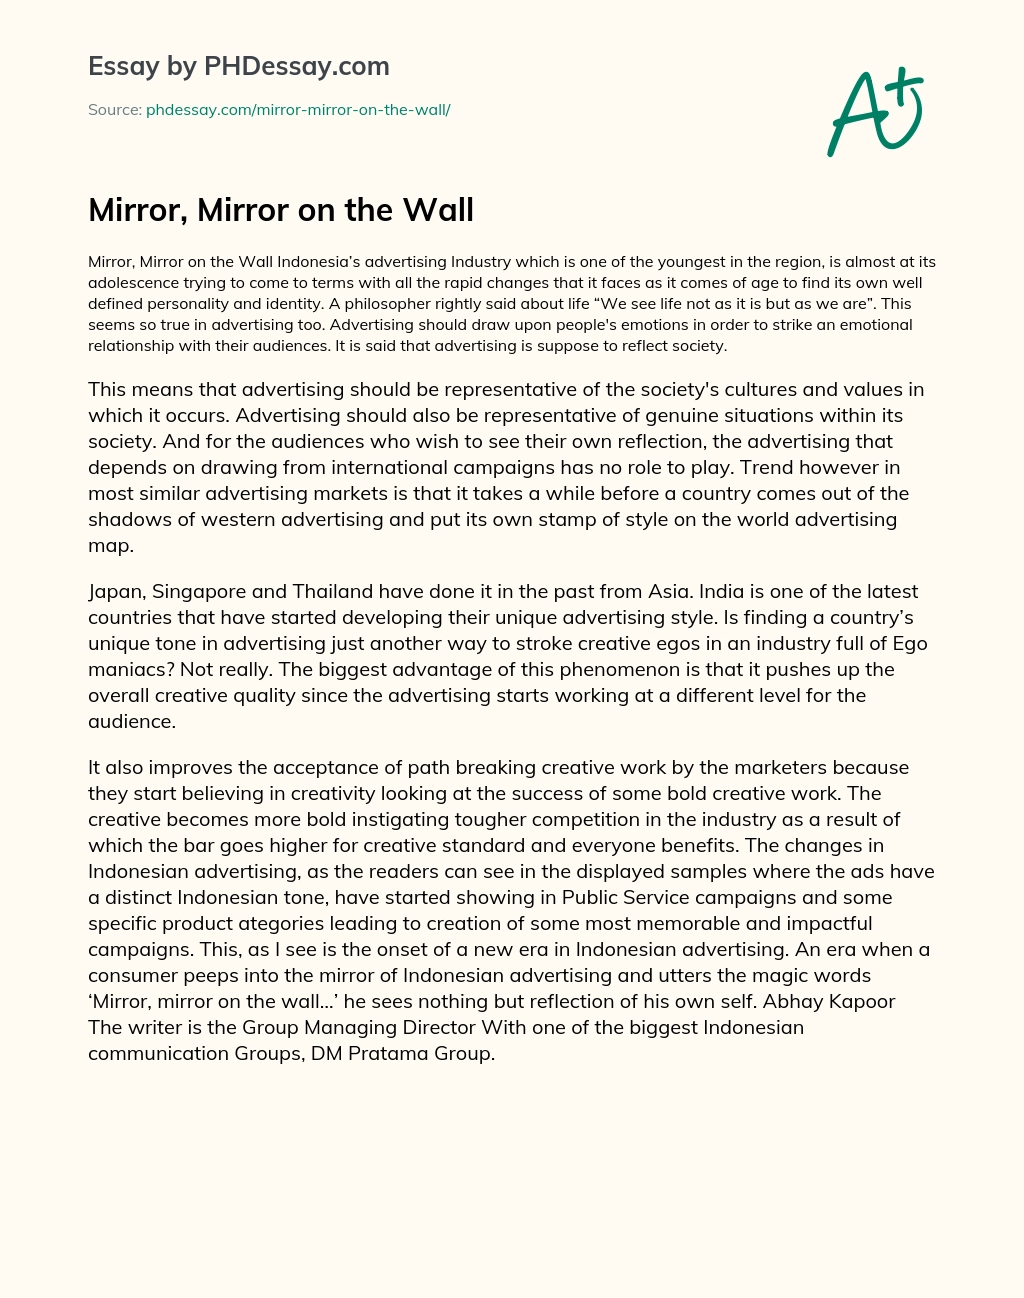 Mirror, Mirror on the Wall essay